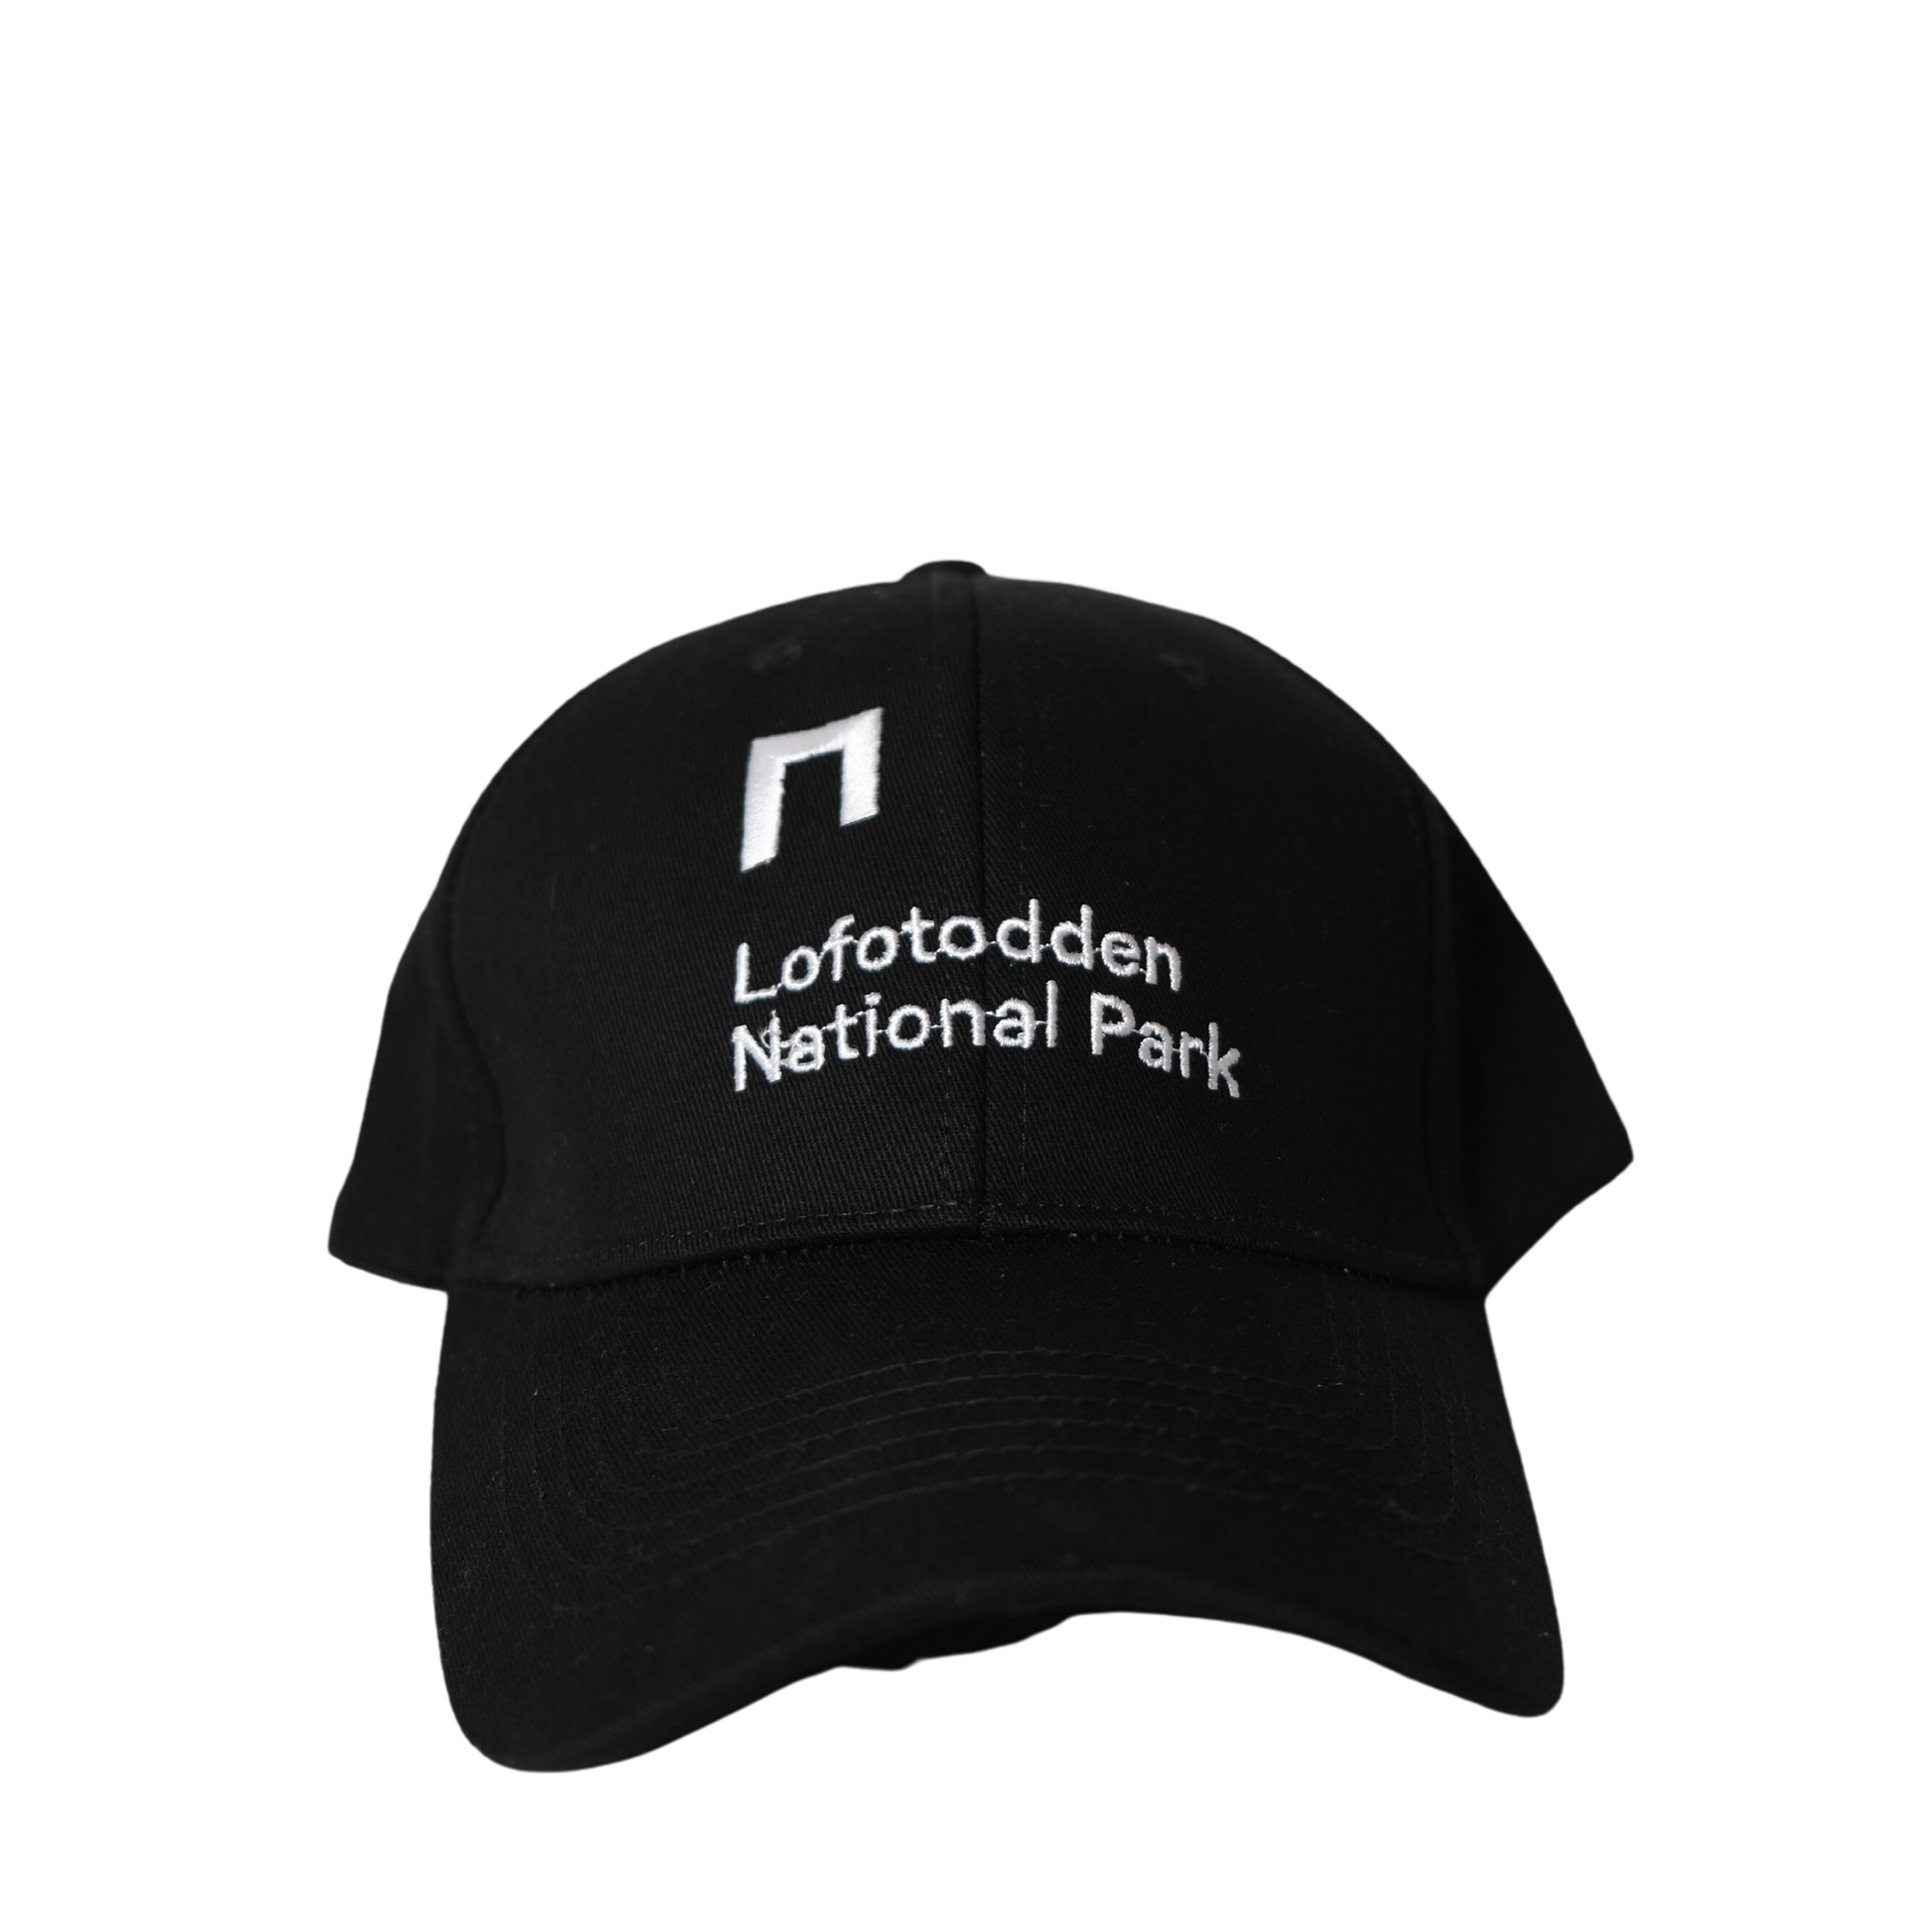 Black Lofotodden National Park cap